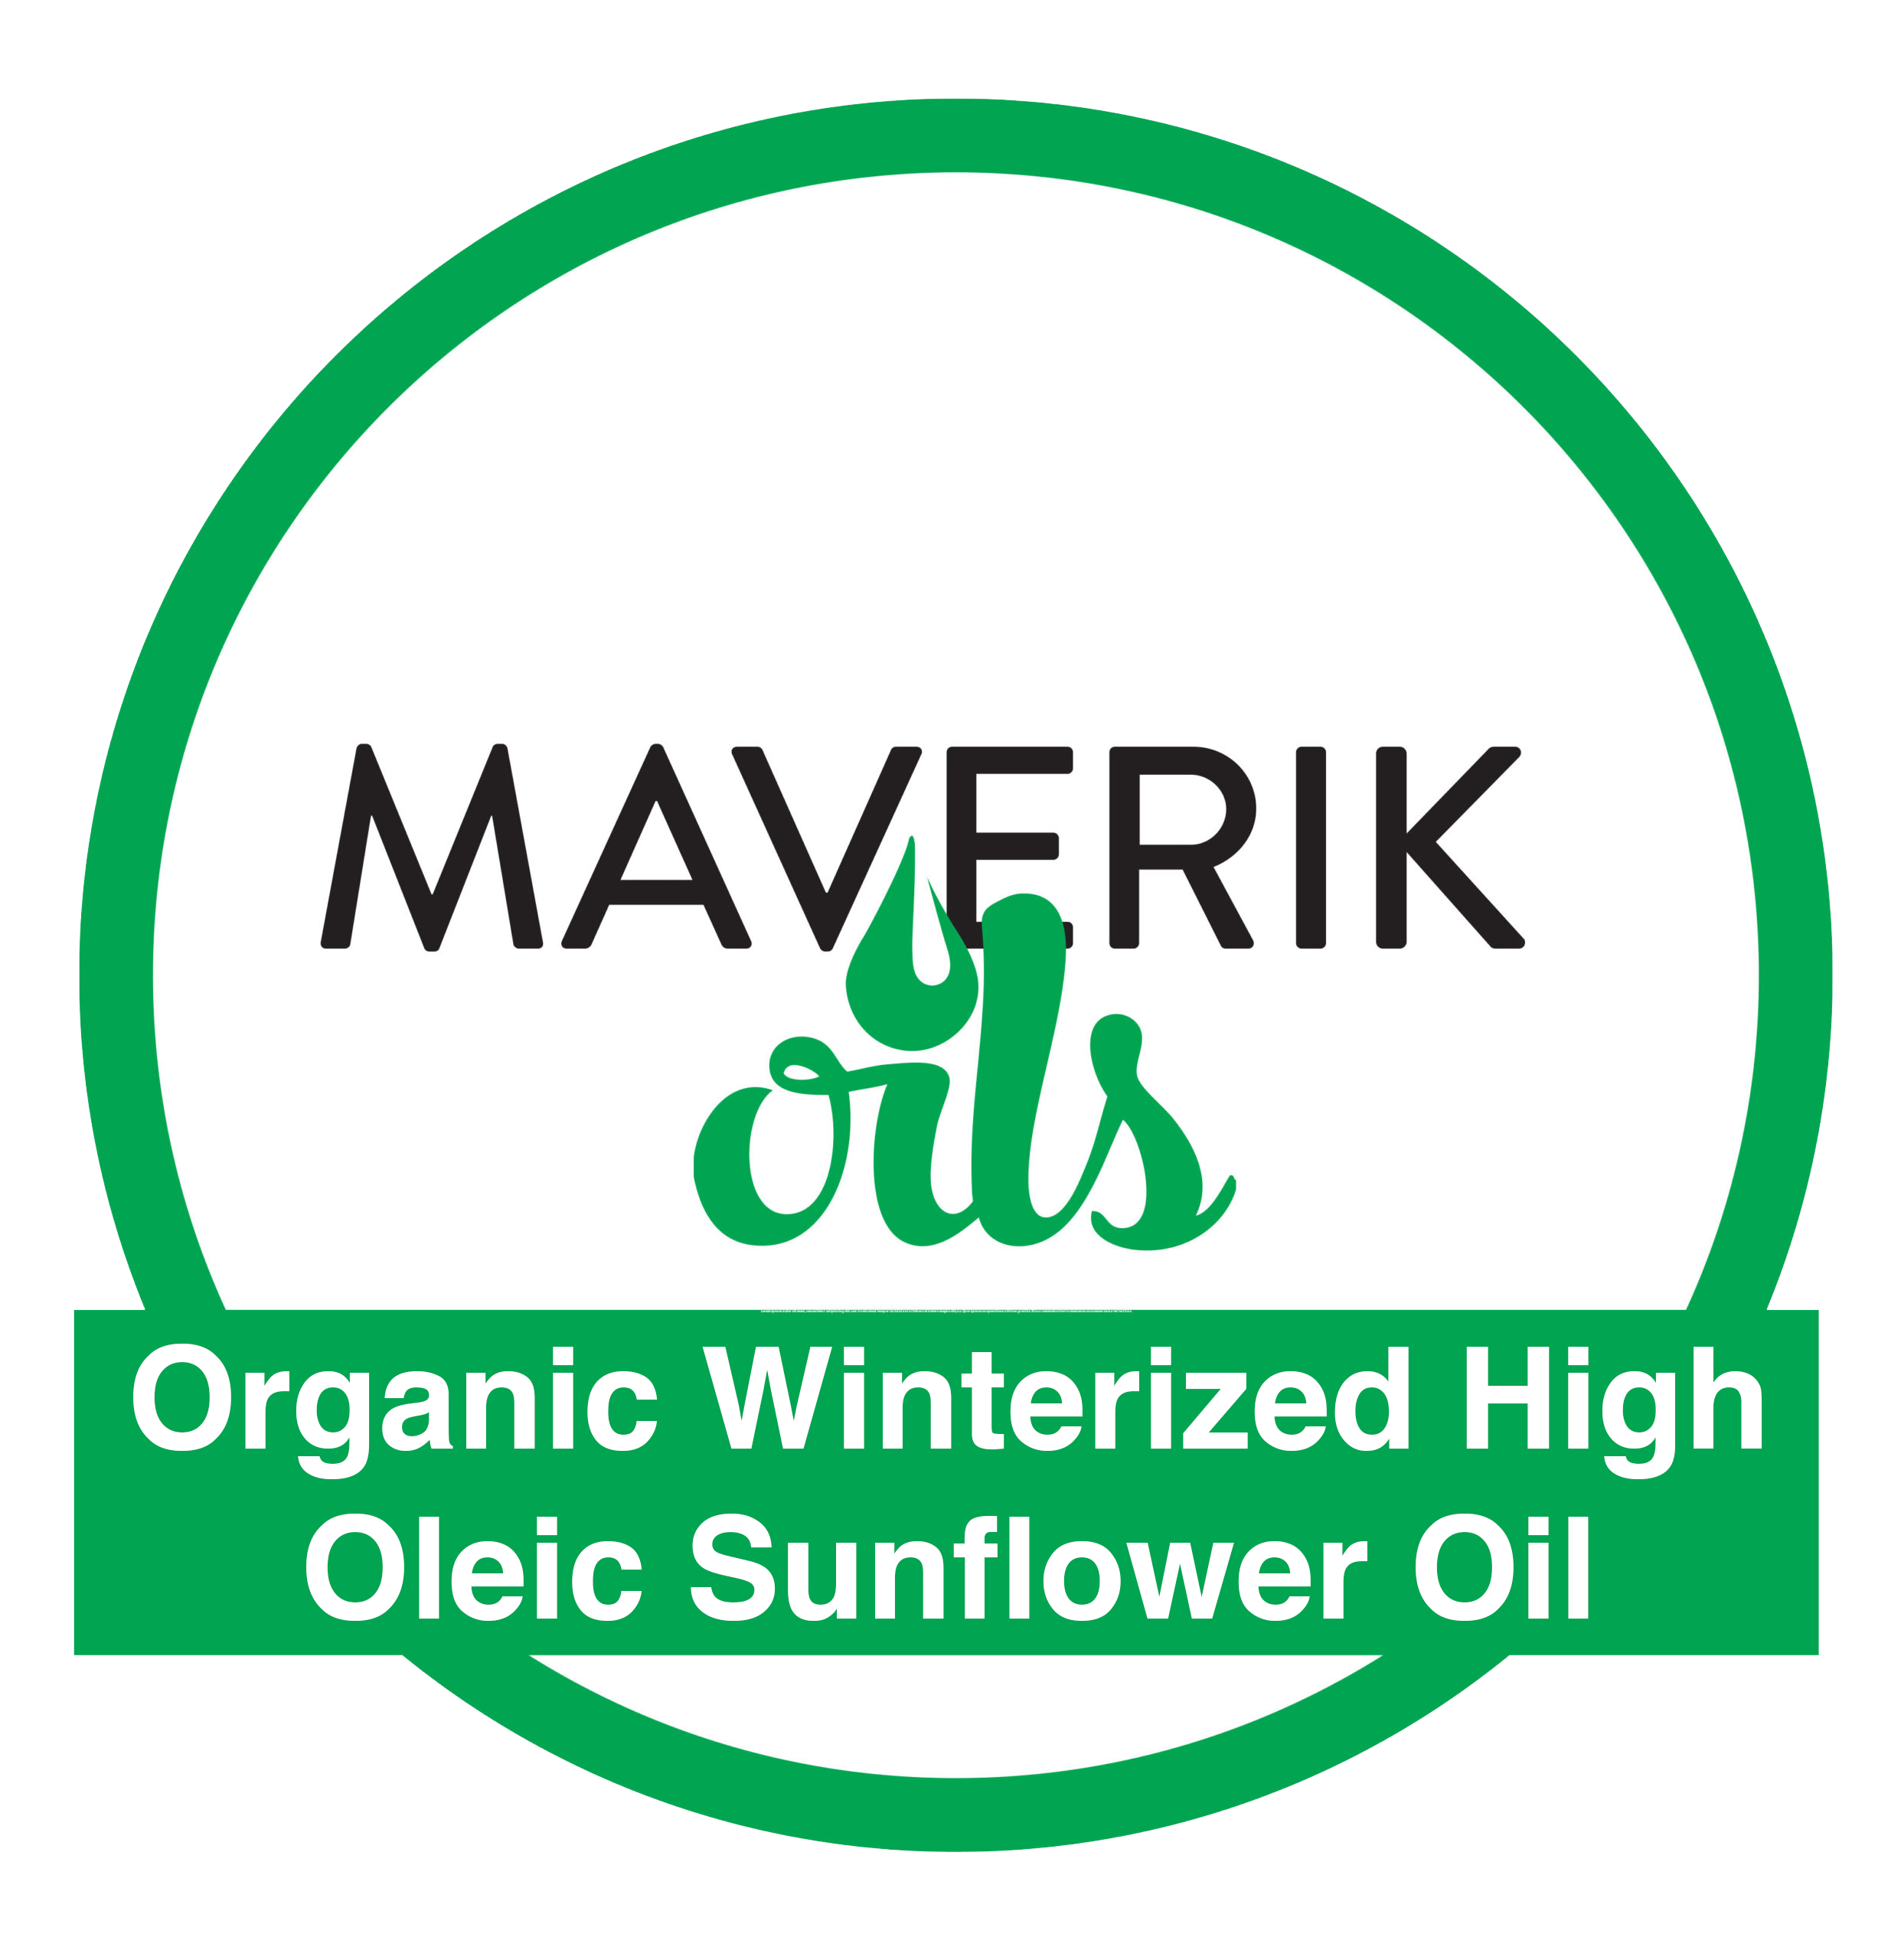 Organic Winterized High Oleic Sunflower Oil